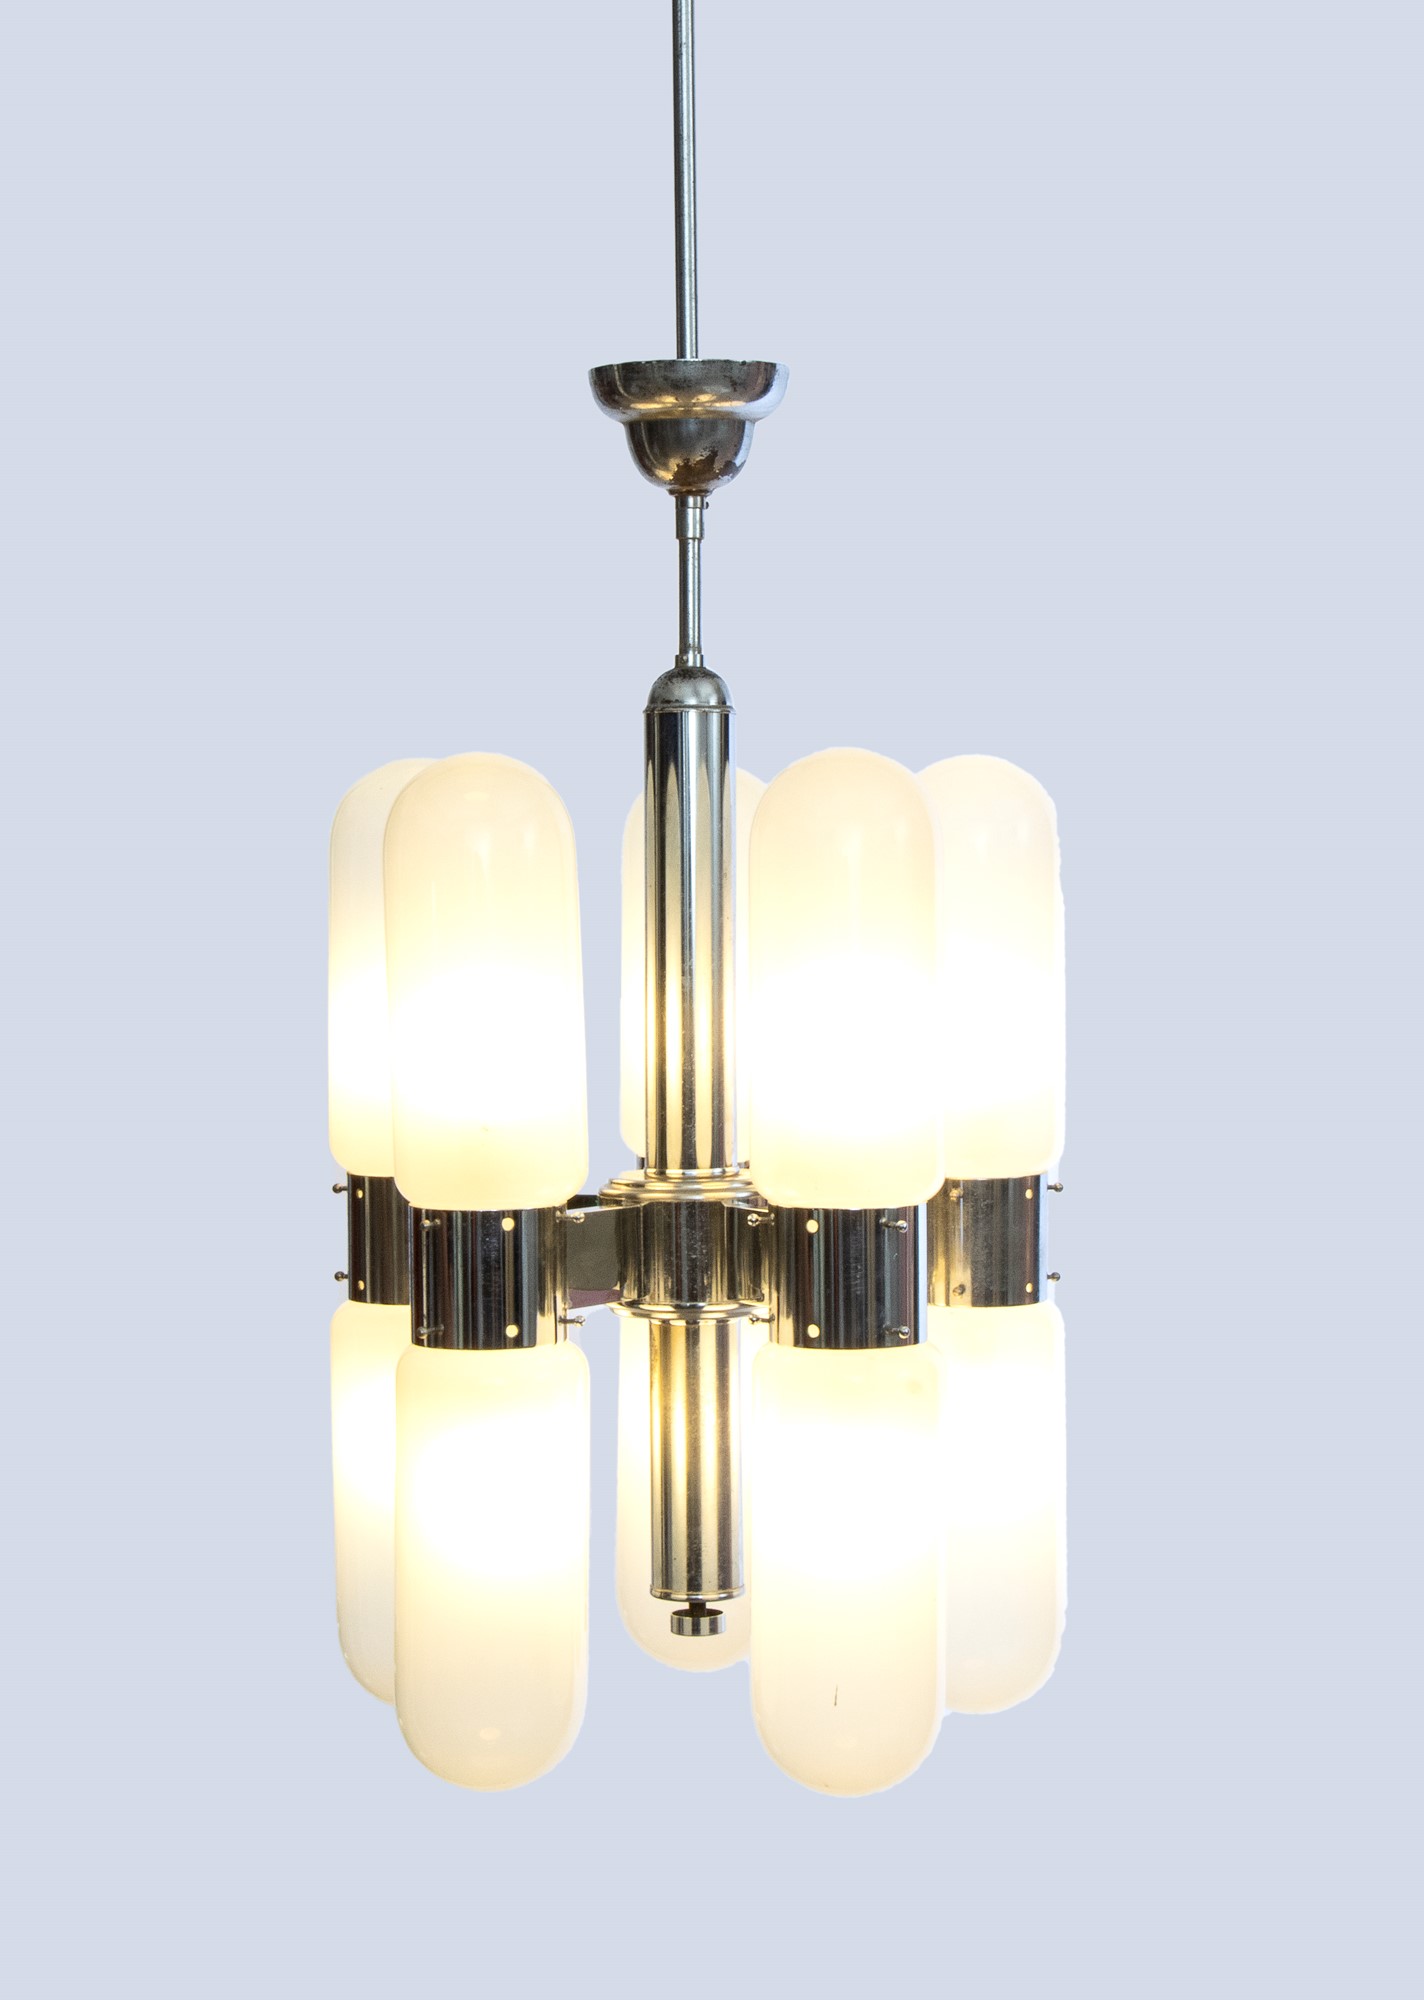 10 lights pendant lamp mod. Torpedo for Mazzega - Image 4 of 15